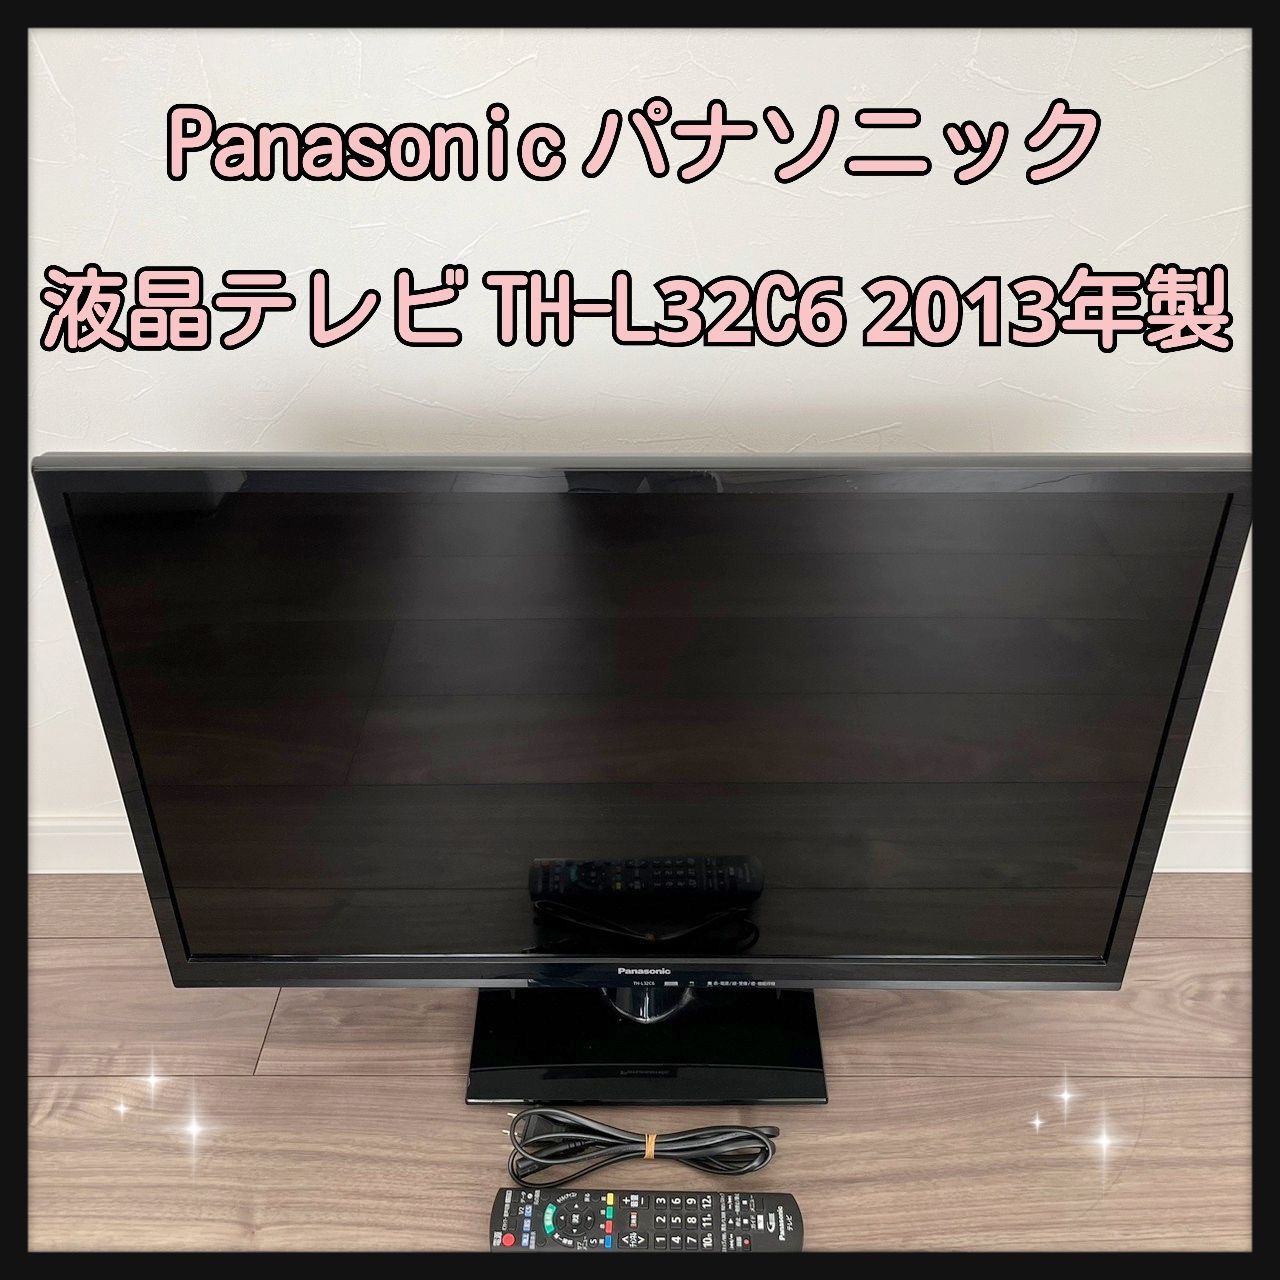 32V型 パナソニック 液晶テレビ 2013年製 TH-L32C6